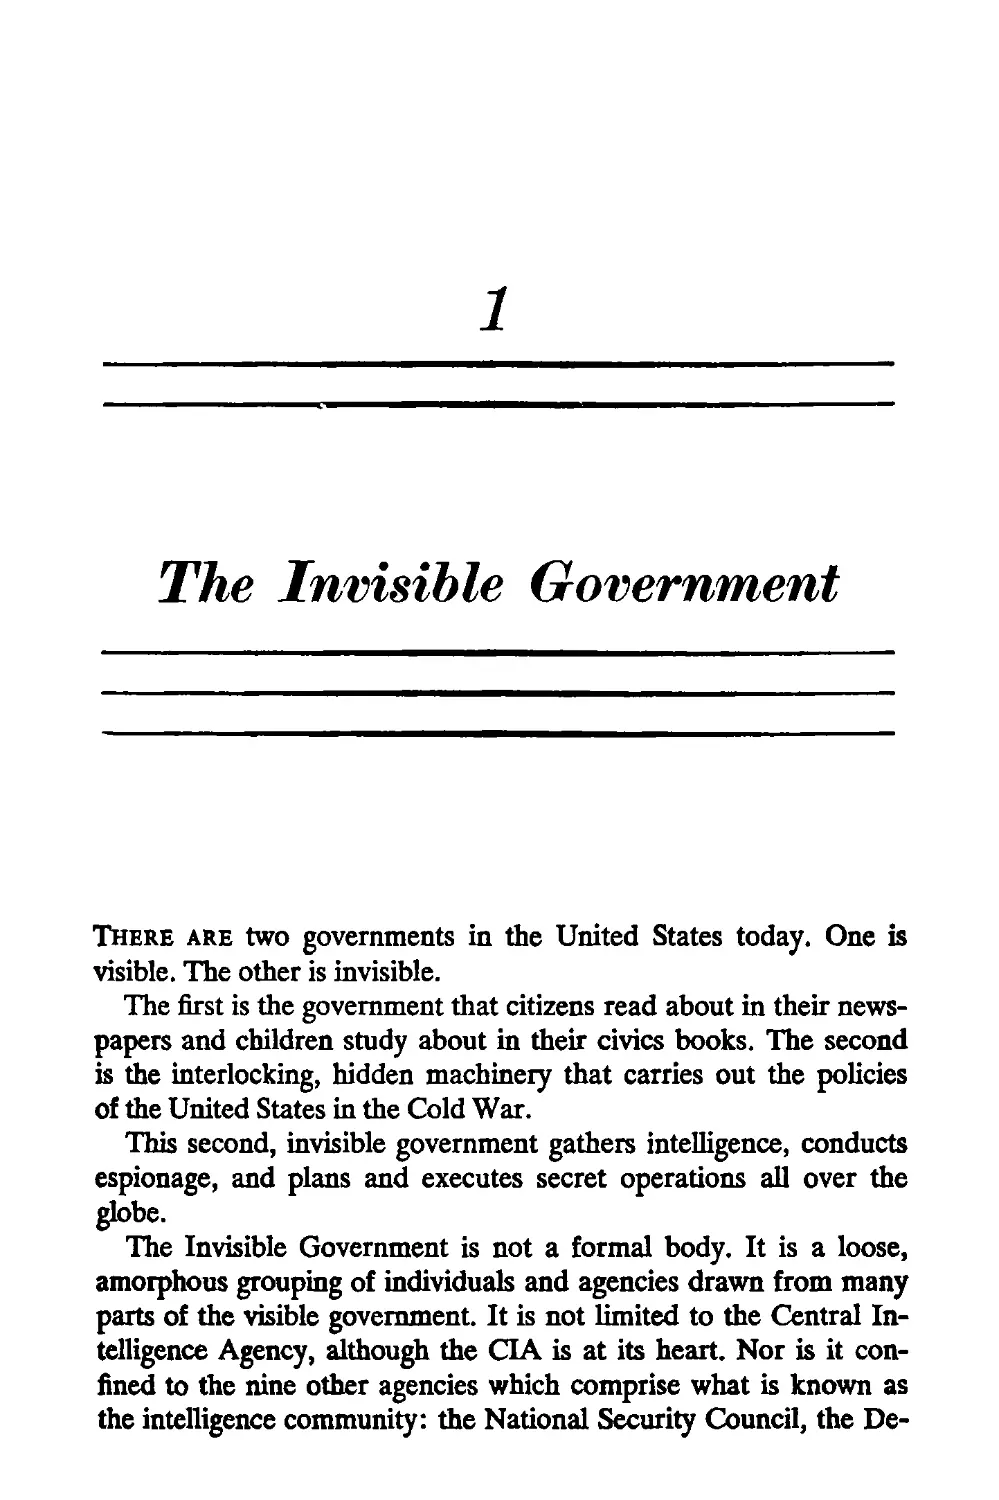 1. The Invisible Government